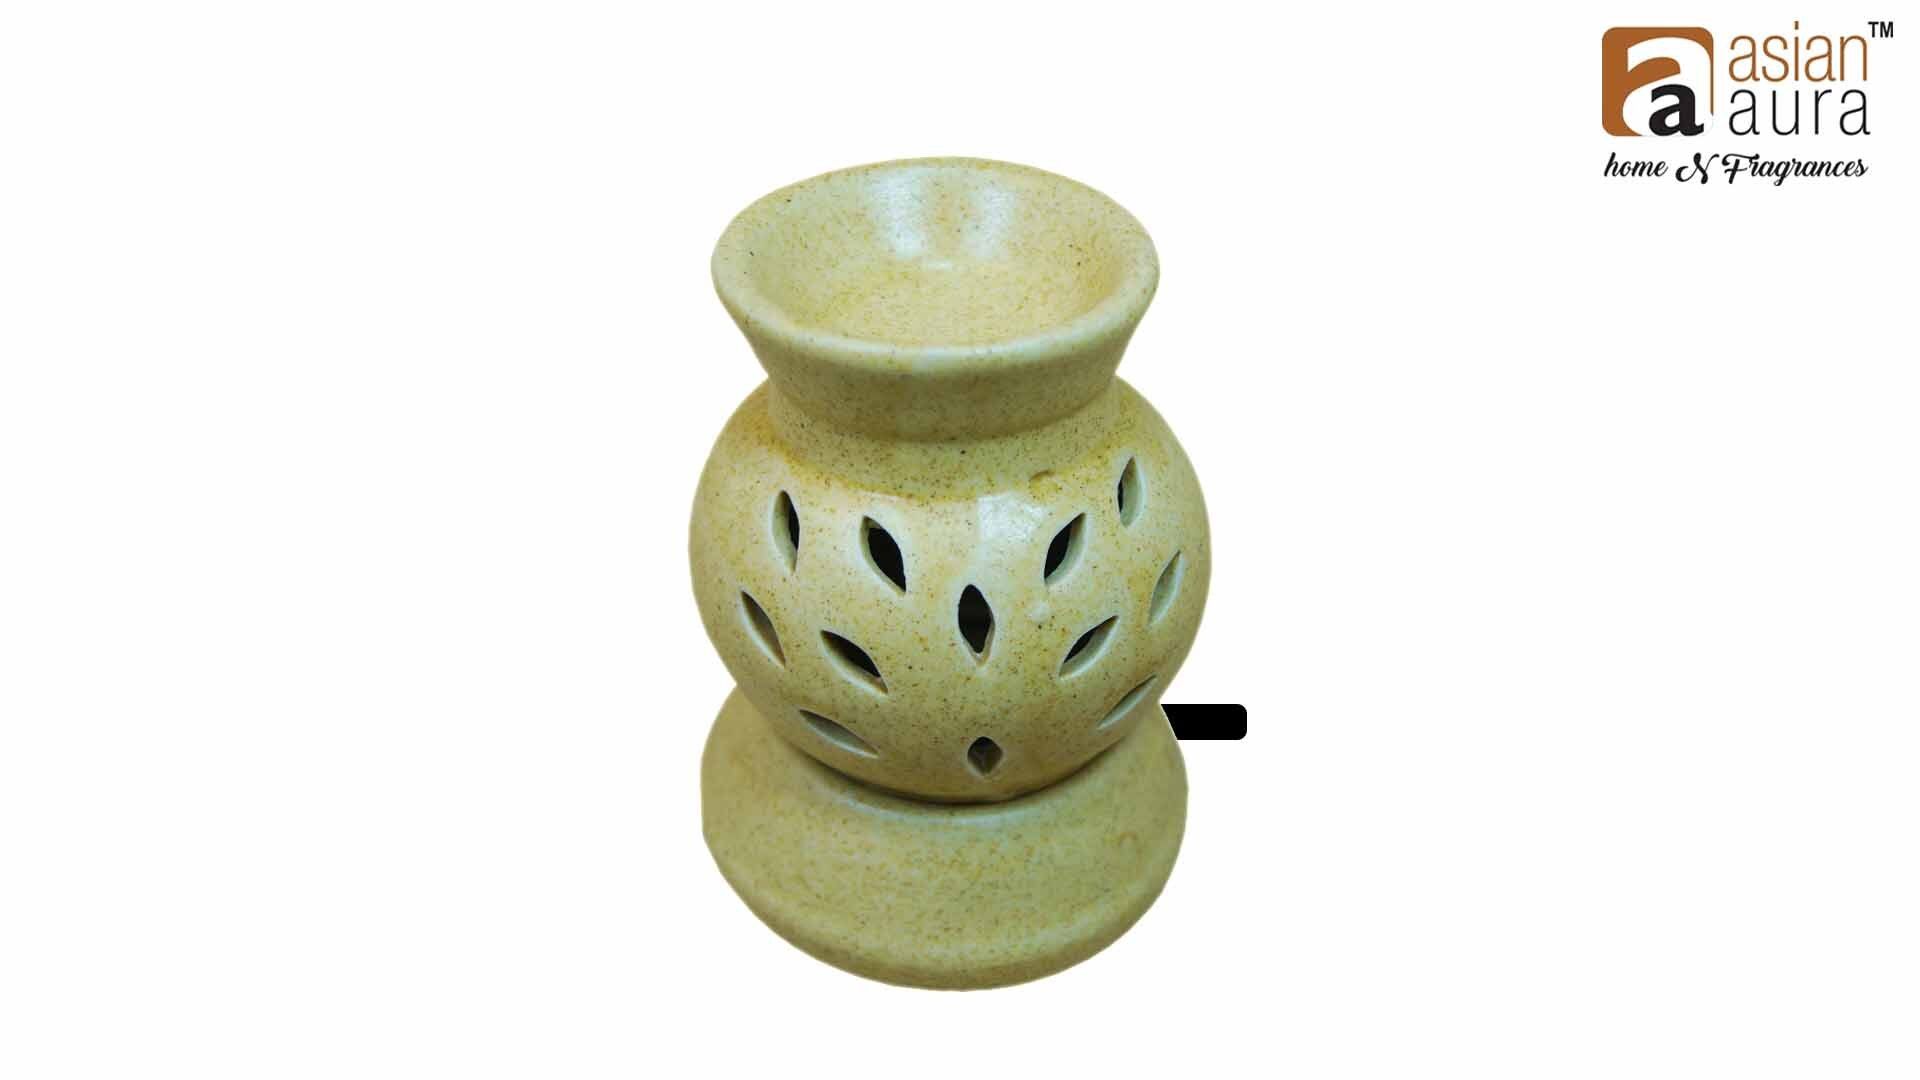 Asian Aura Ceramic Aromatic Oil Diffuser with 2 oil bottles AAEB 0014-W